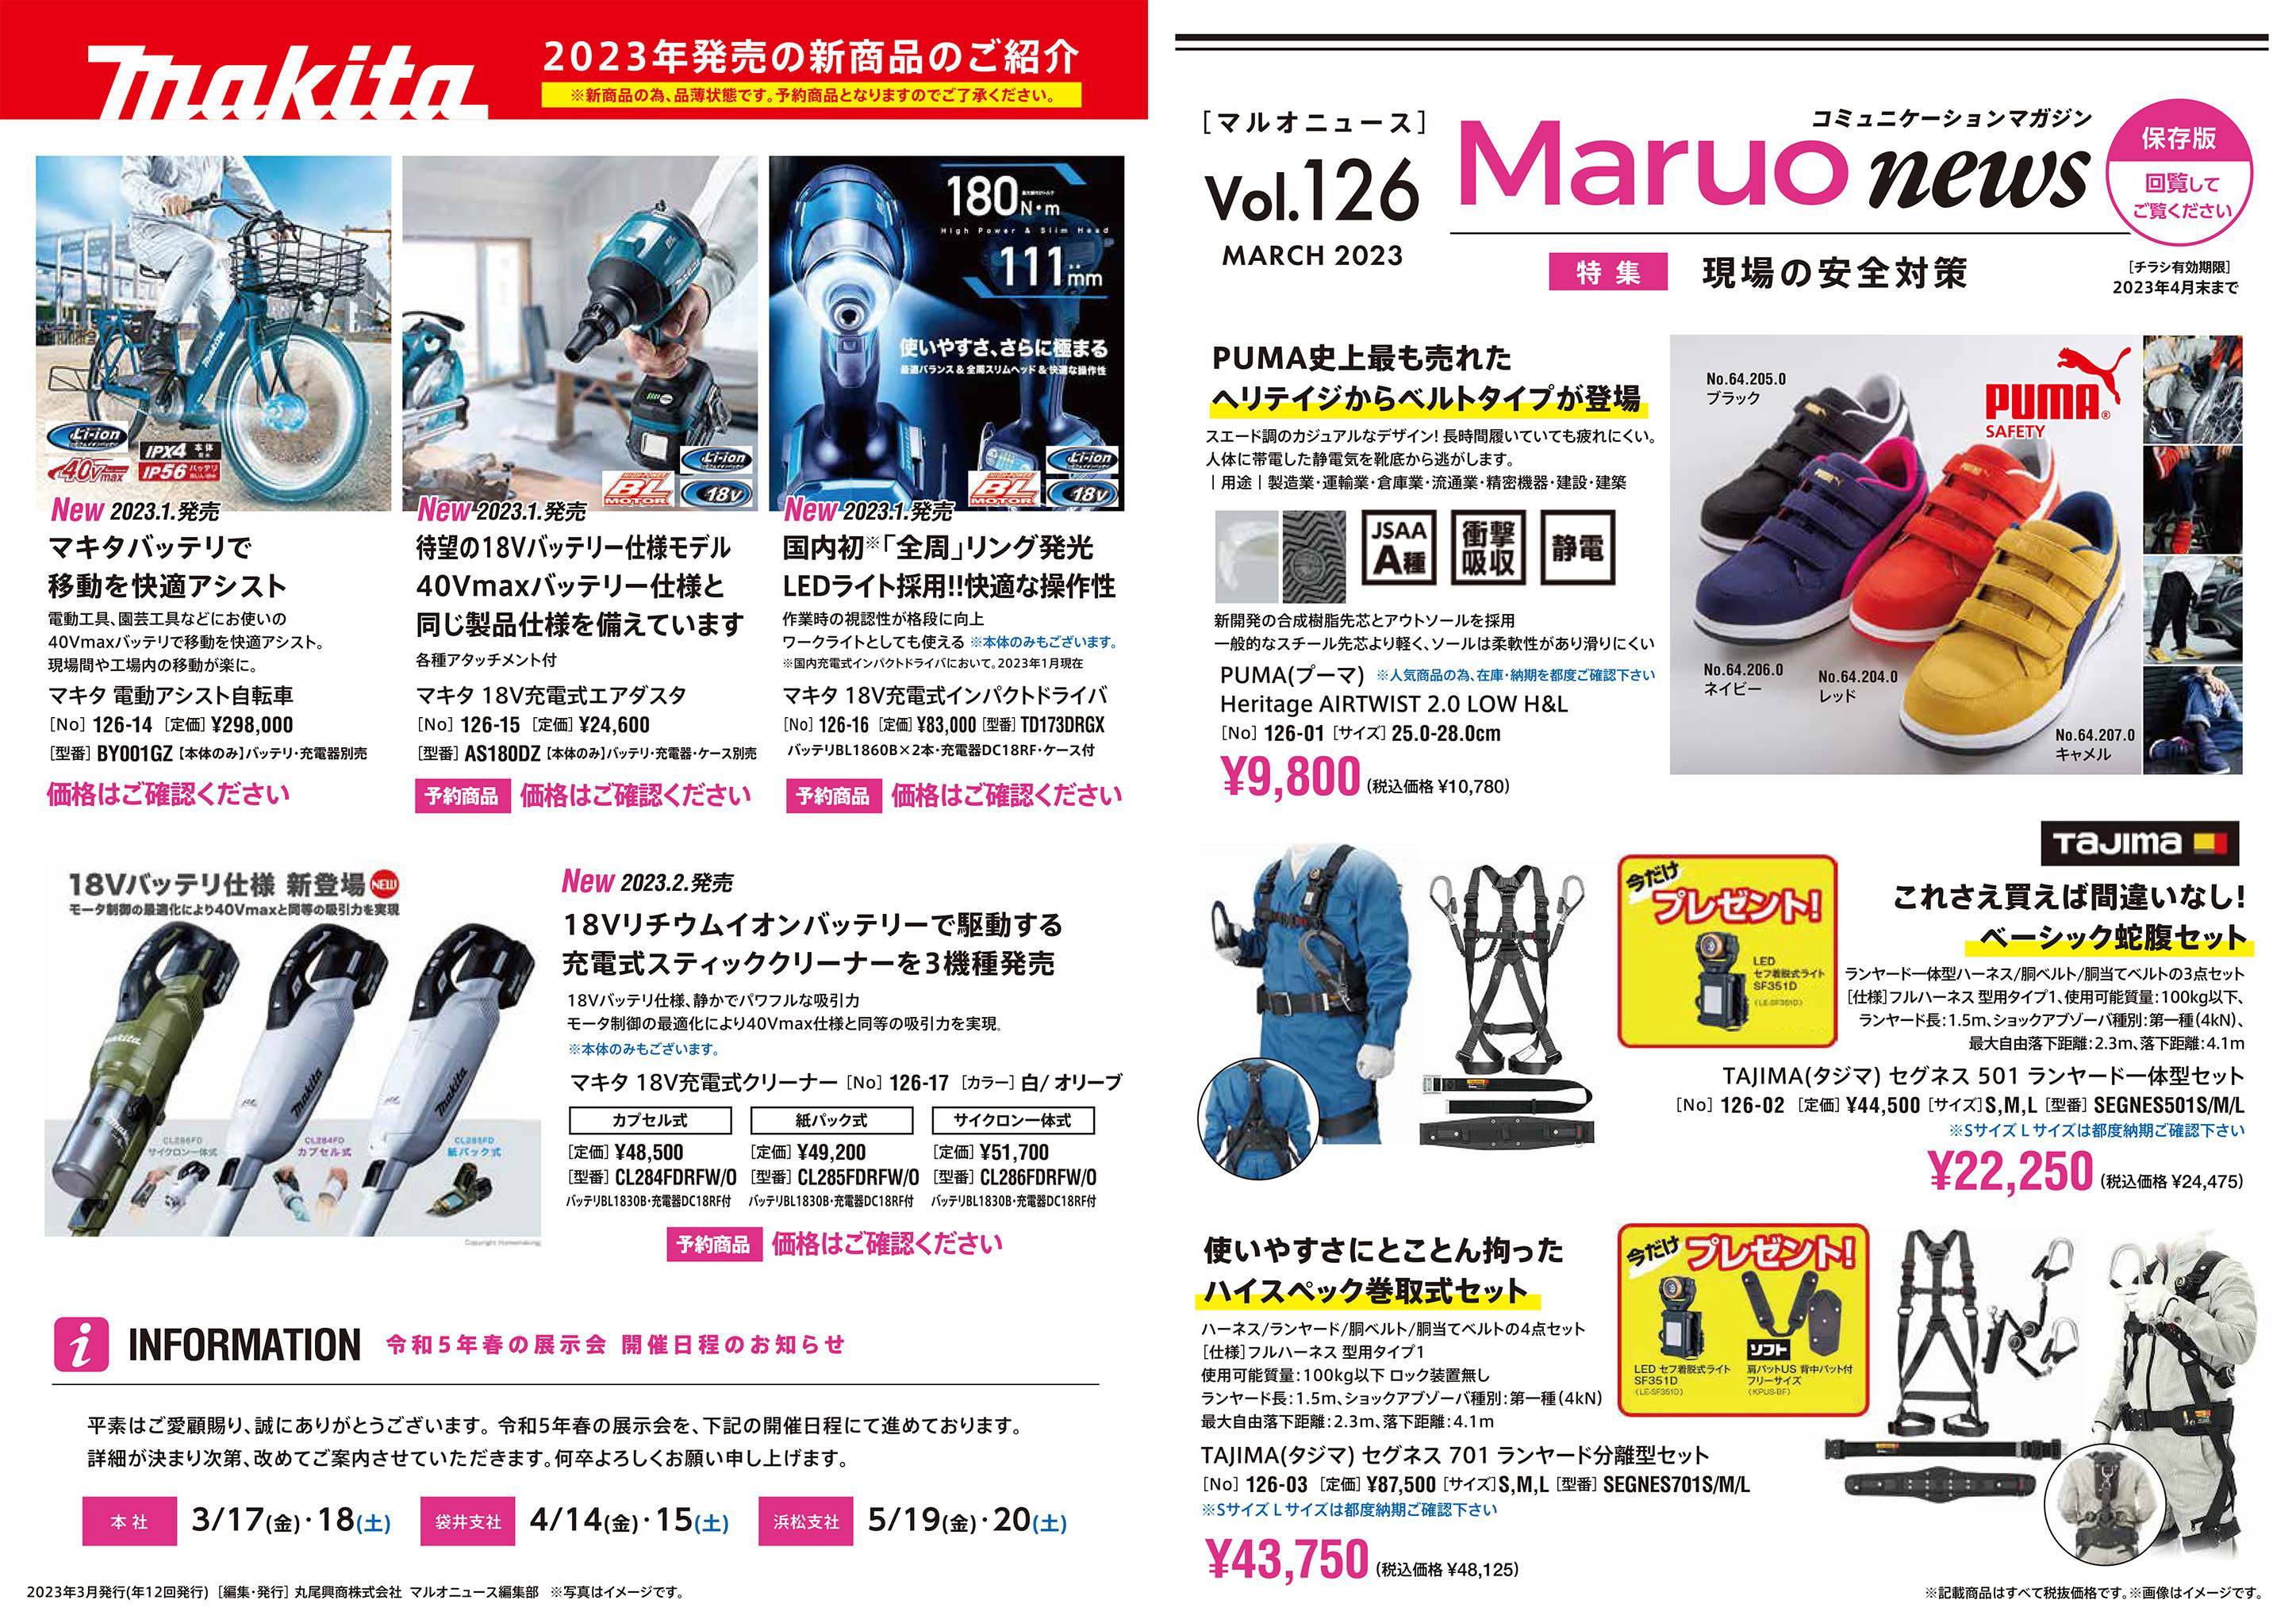 Maruo news Vol.126 松井トーヨー住建のイベントキャンペーン 写真1